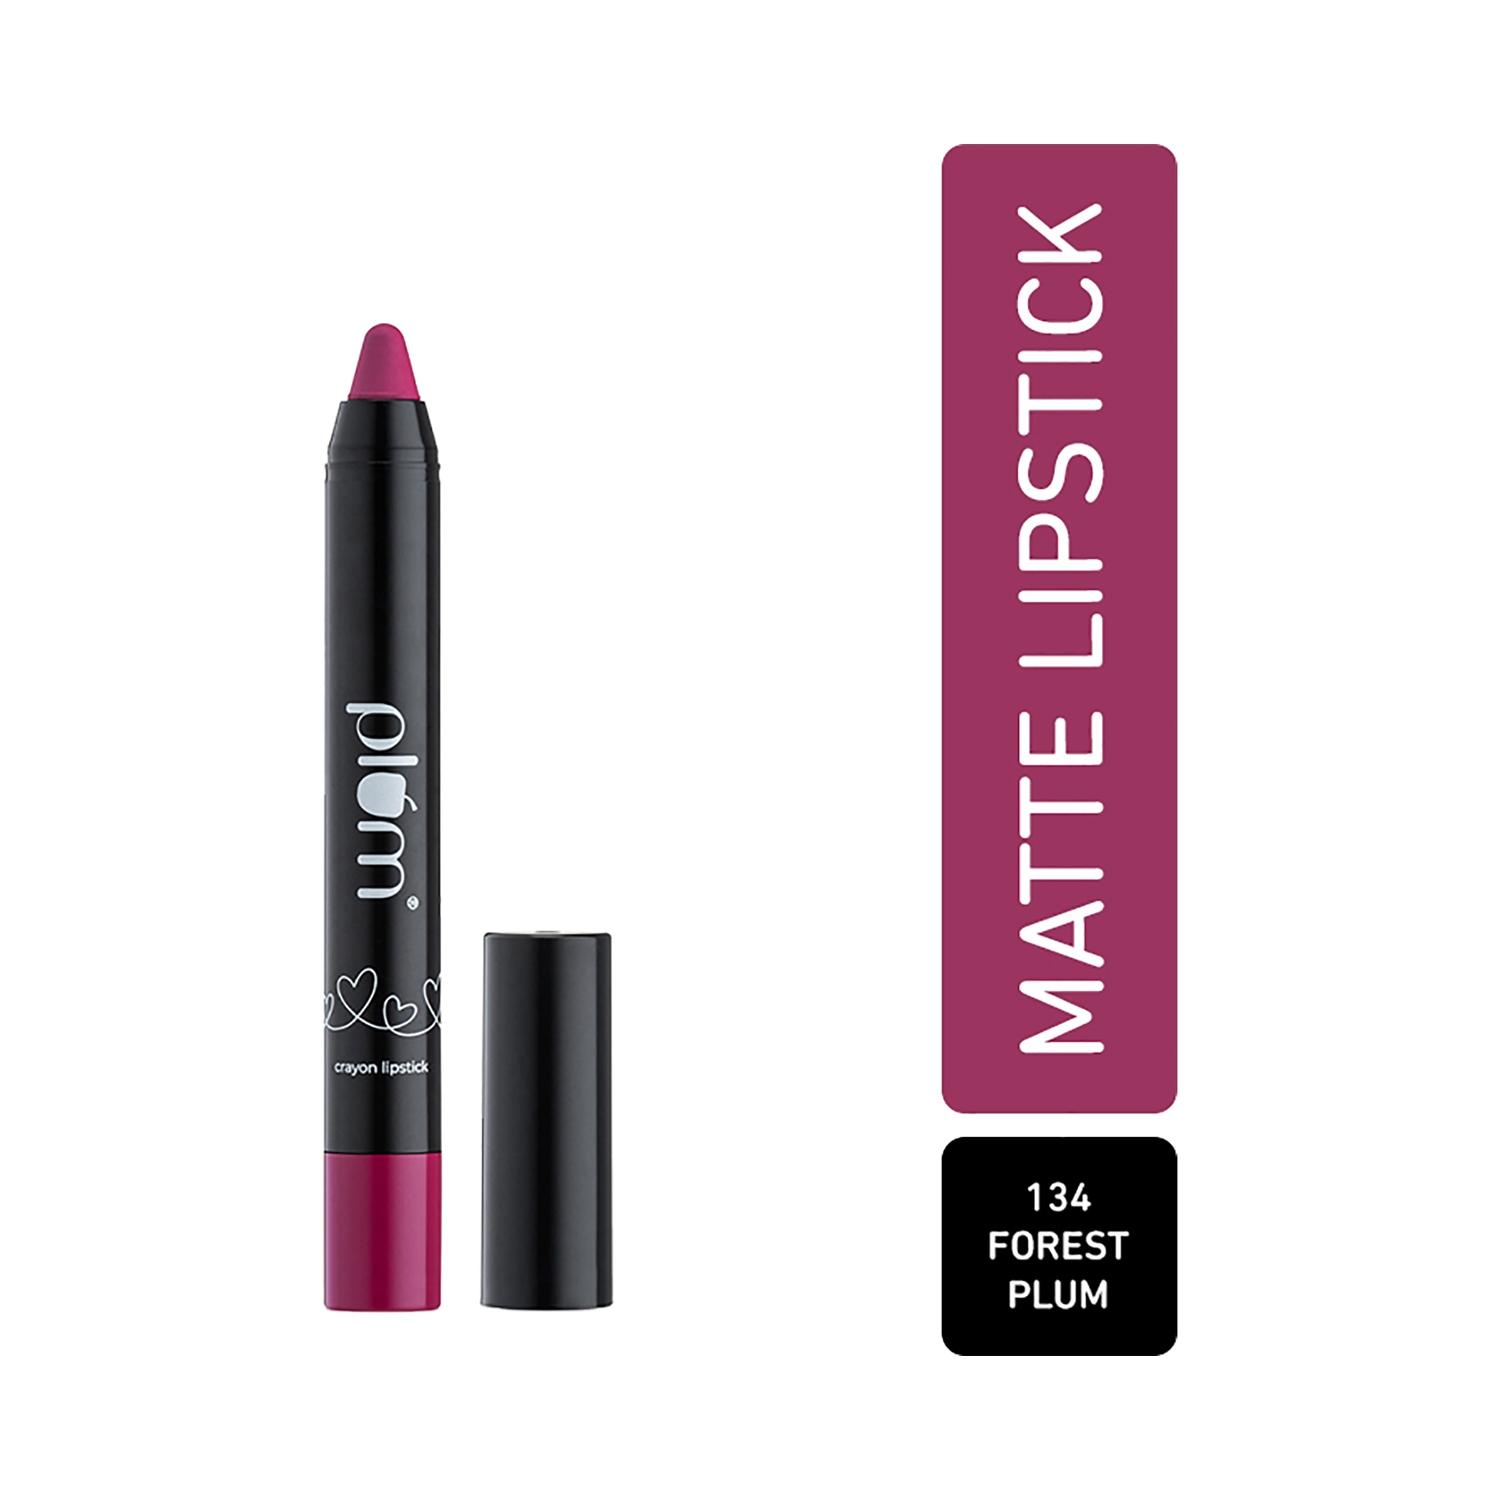 plum twist & go matte crayon lipstick with ceramides & hyaluronic acid - 134 forrest plum (1.8g)